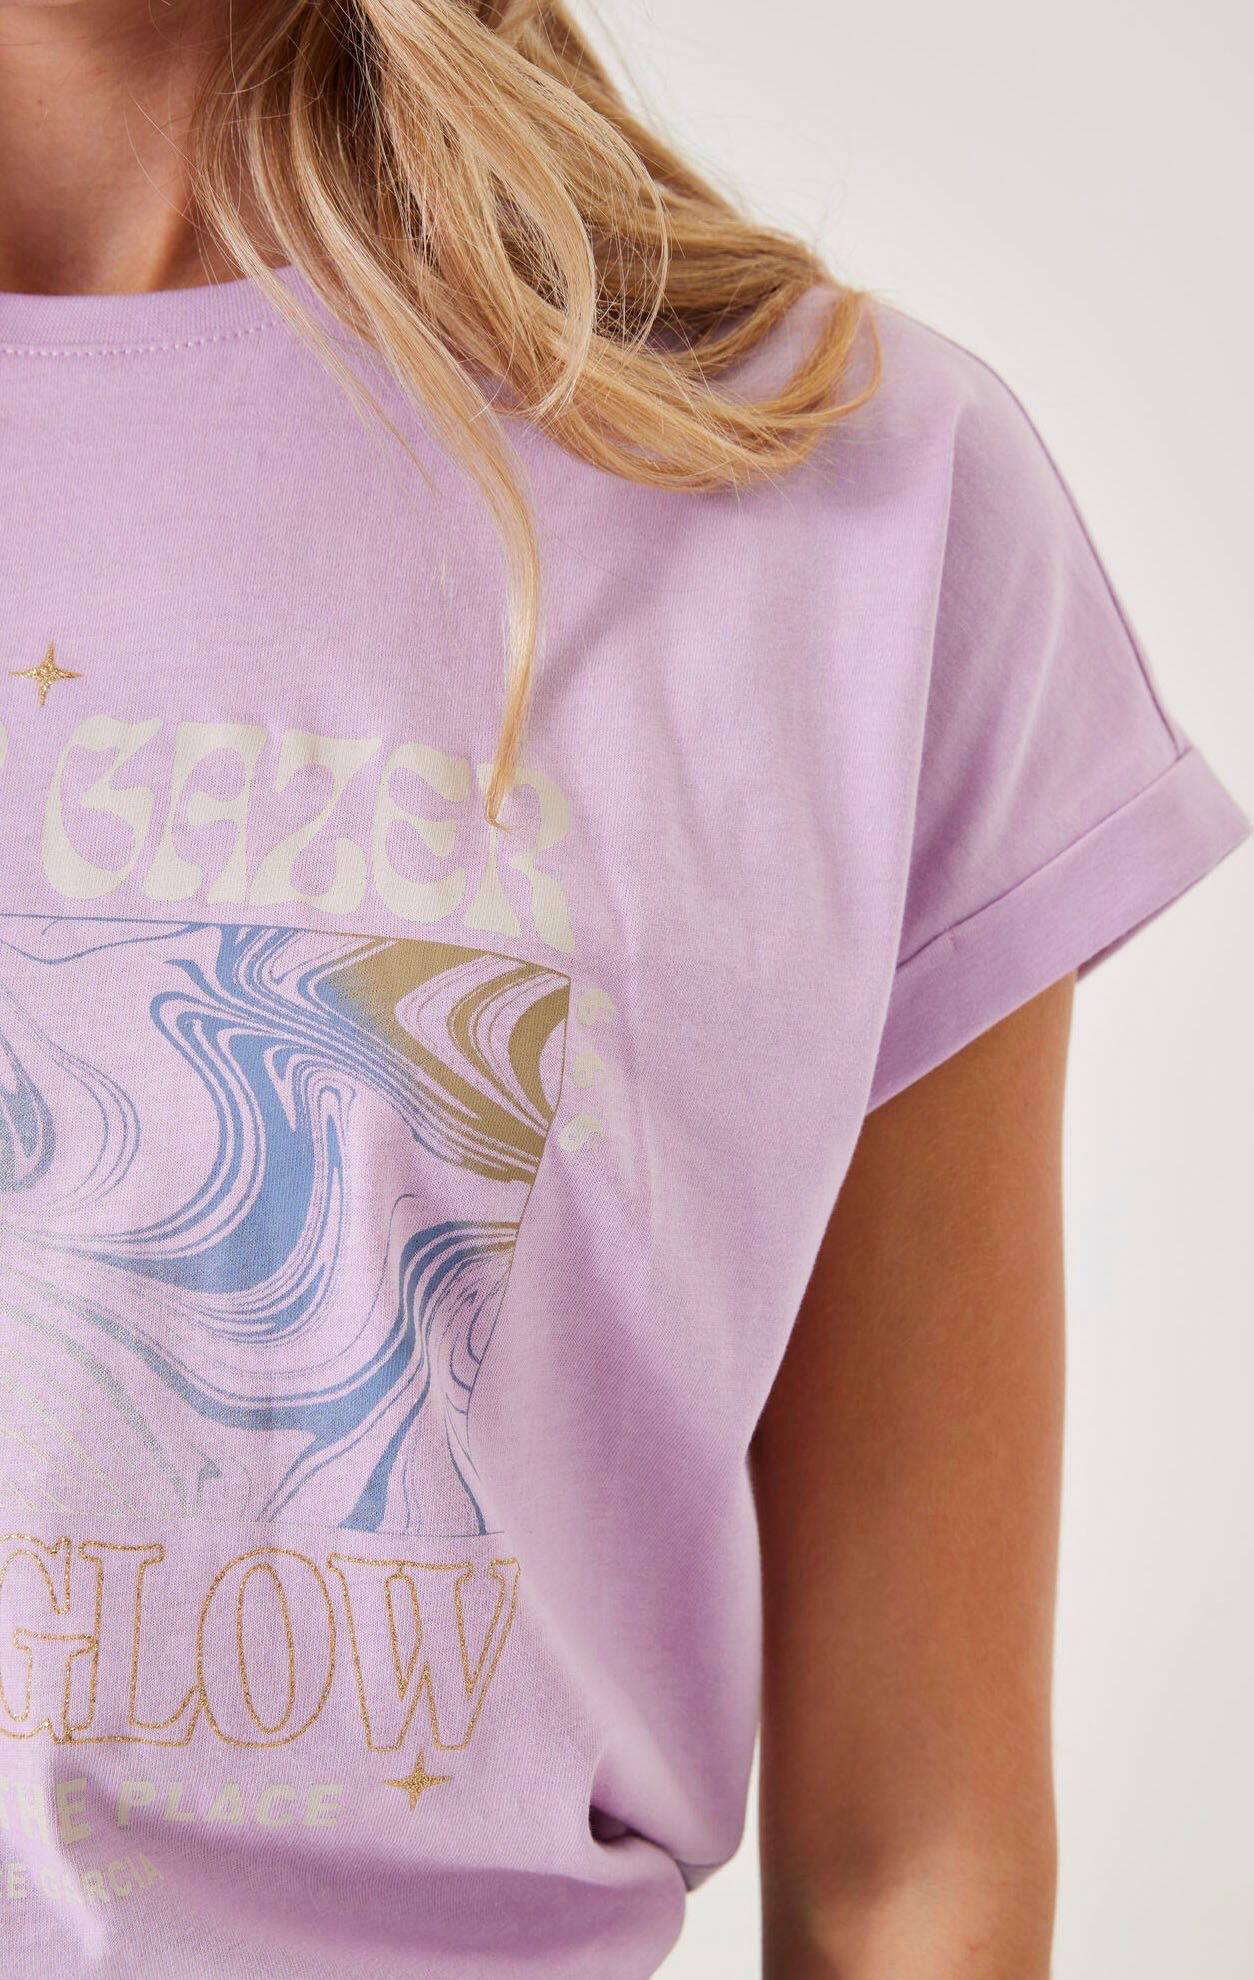 Garcia fragnant Print-Shirt lil